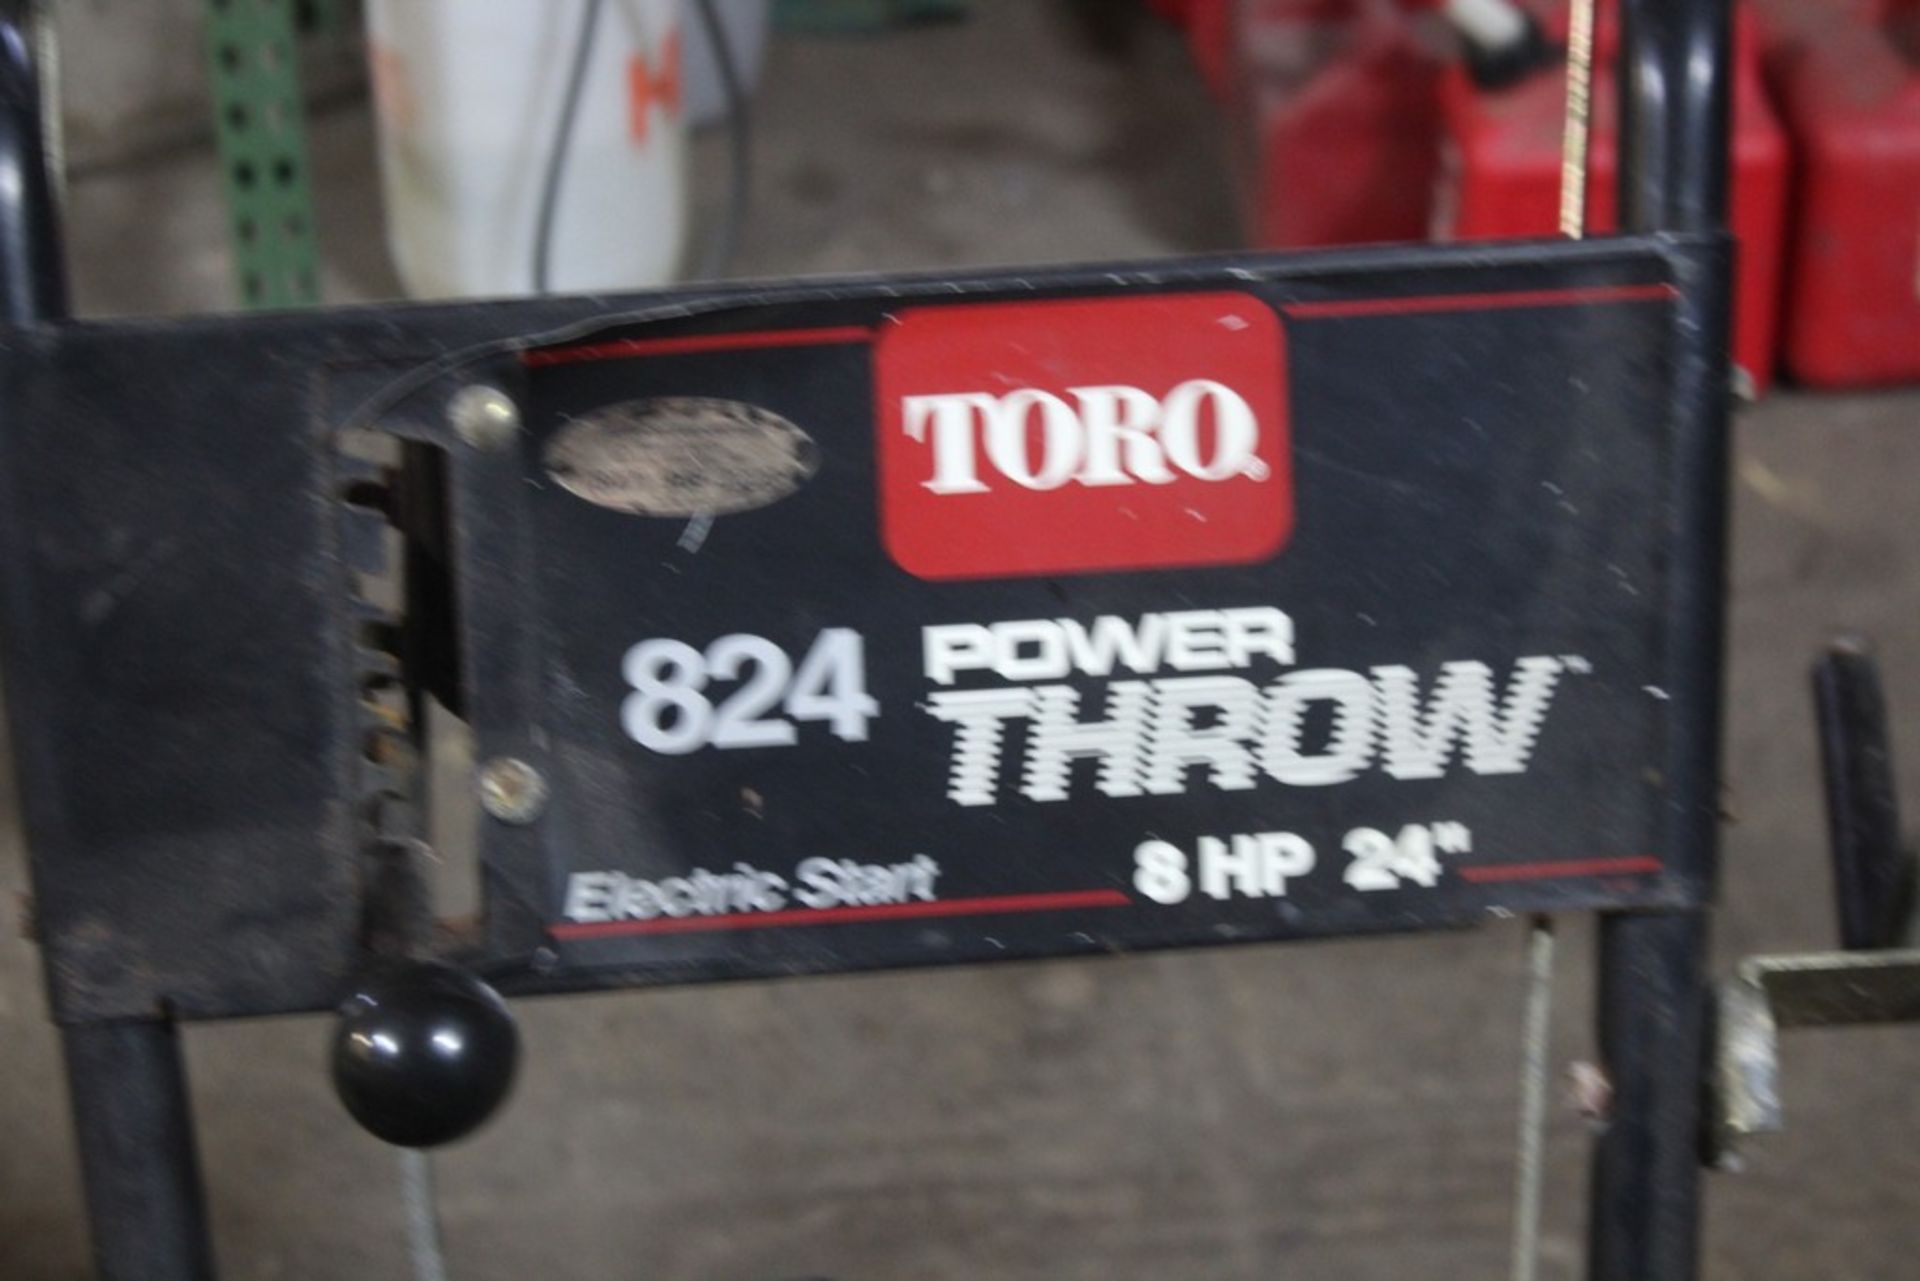 TORO POWER THROW 824 24" 8 HP 2-STAGE SNOW BLOWER WITH TECUMSEH ENGINE - Image 2 of 2